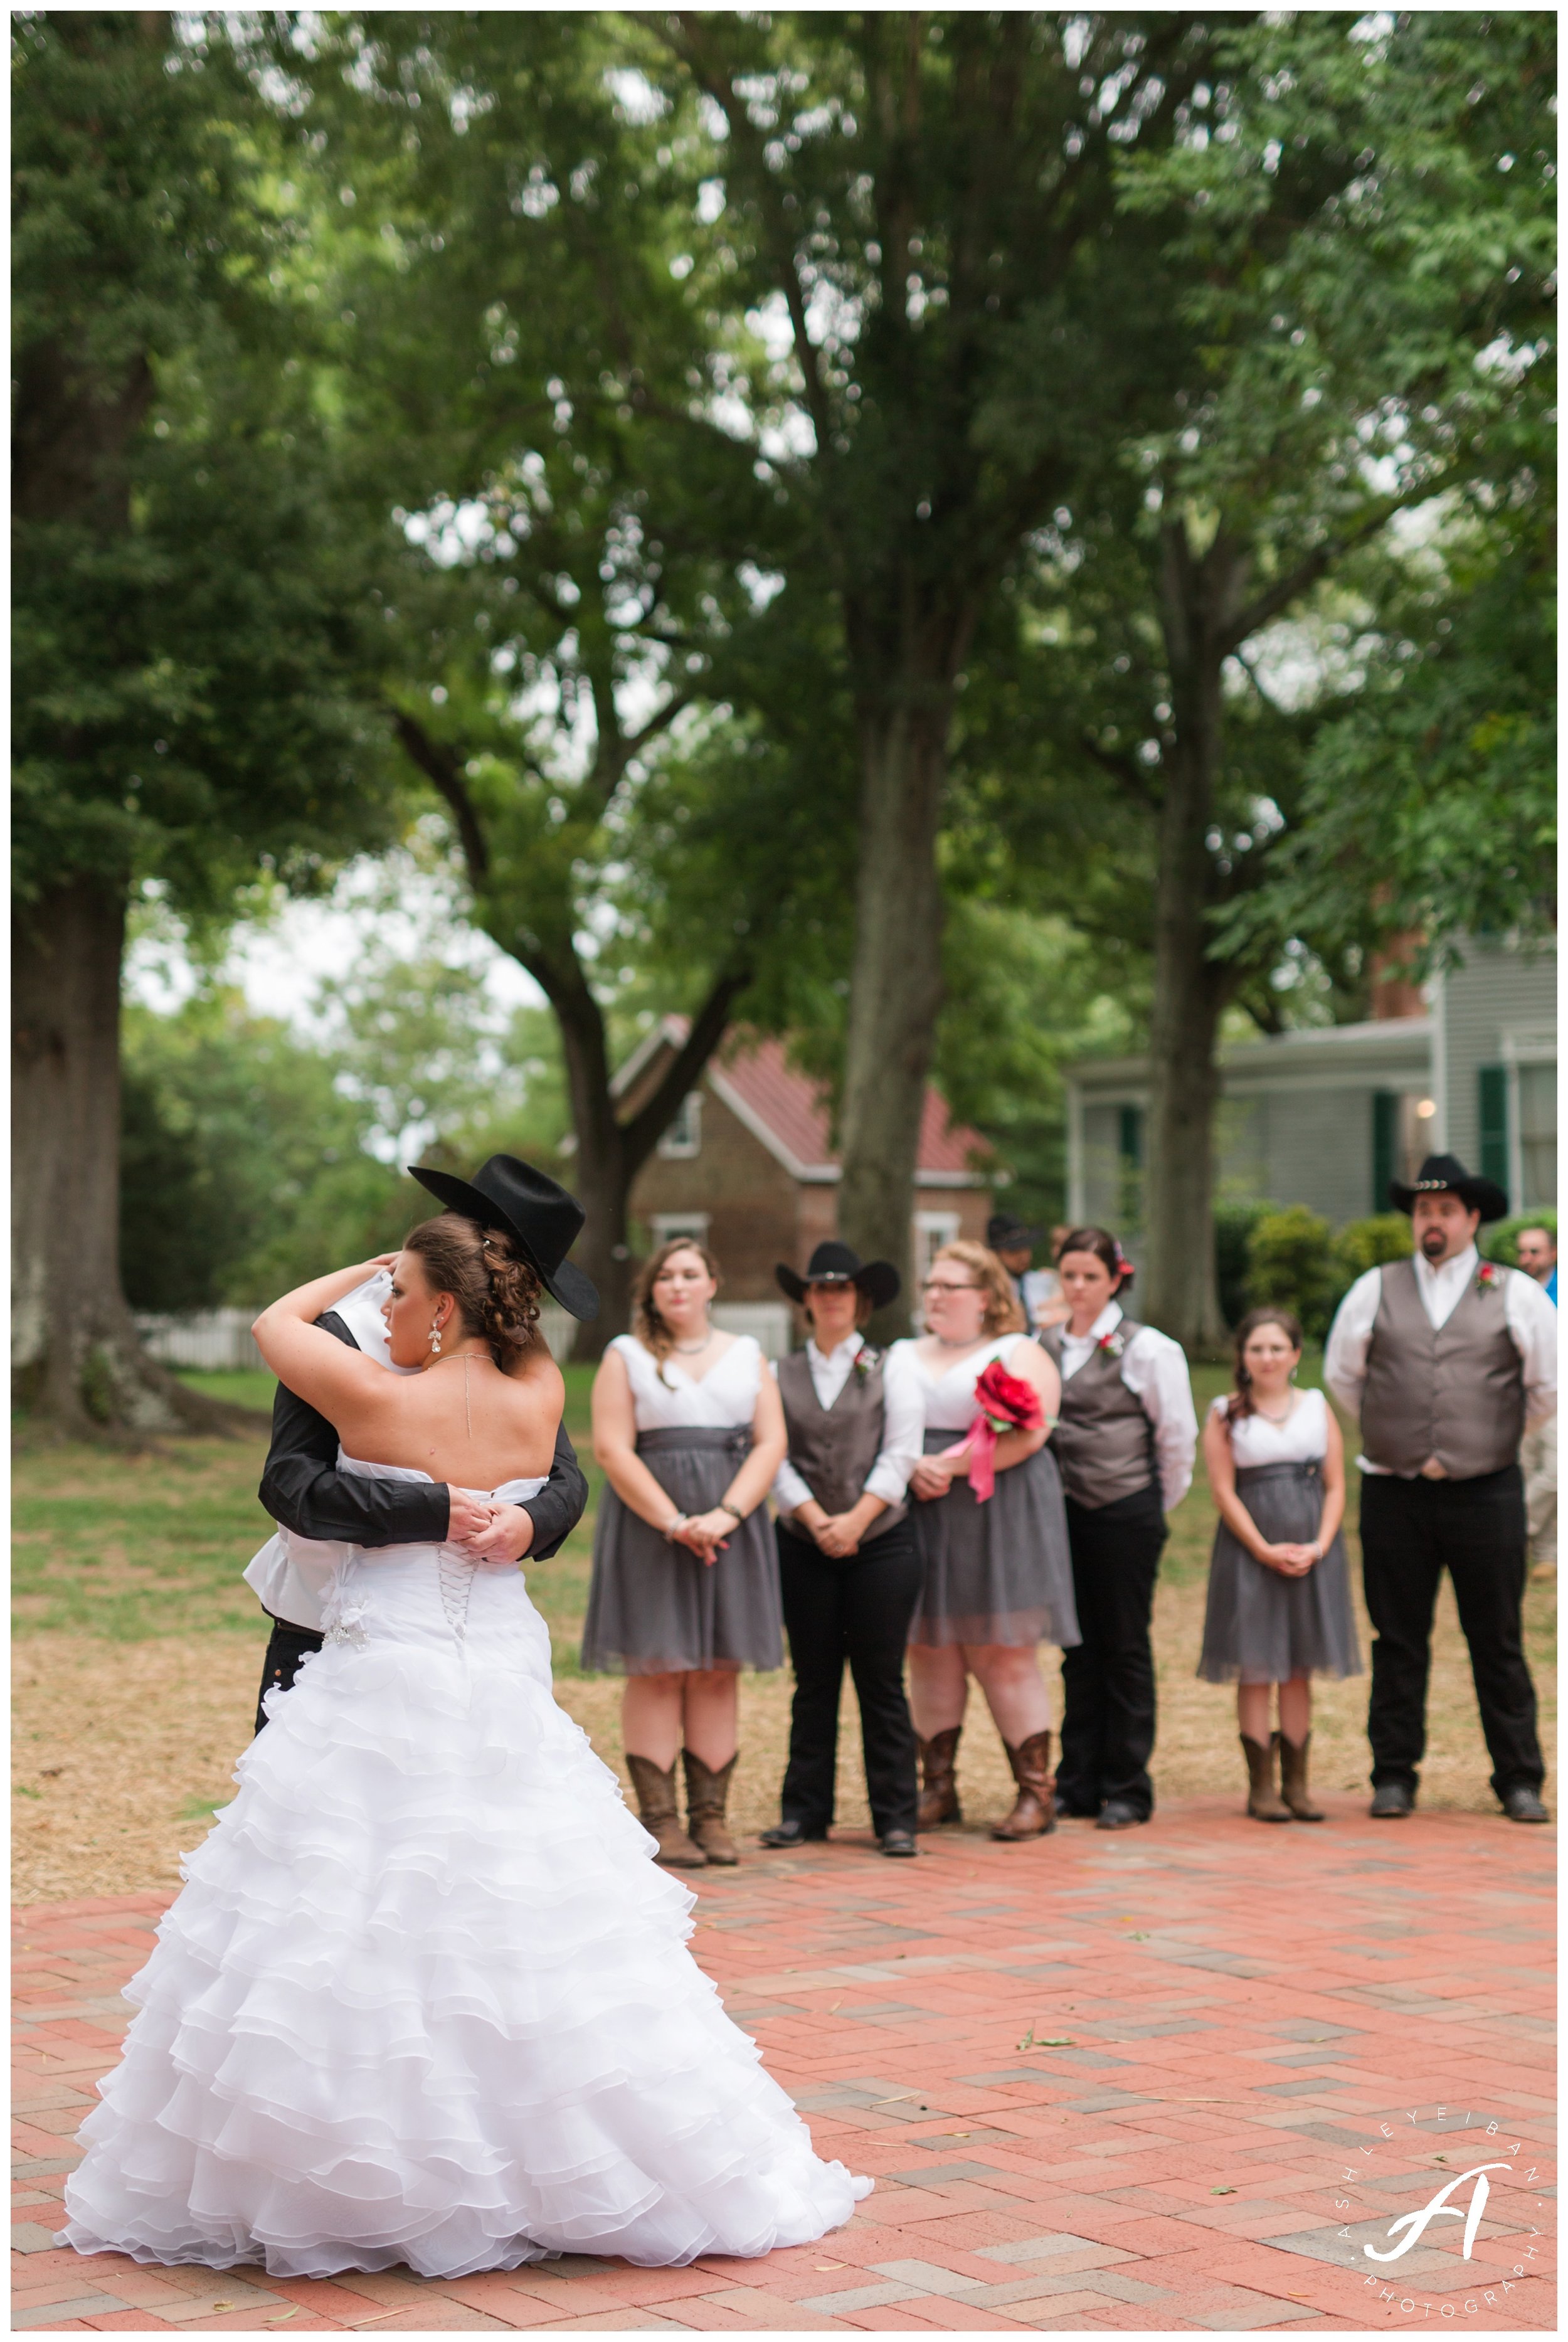 Avoca Museum Wedding || Central VA Wedding || Lynchburg Virginia Wedding Photographer || www.ashleyeiban.com